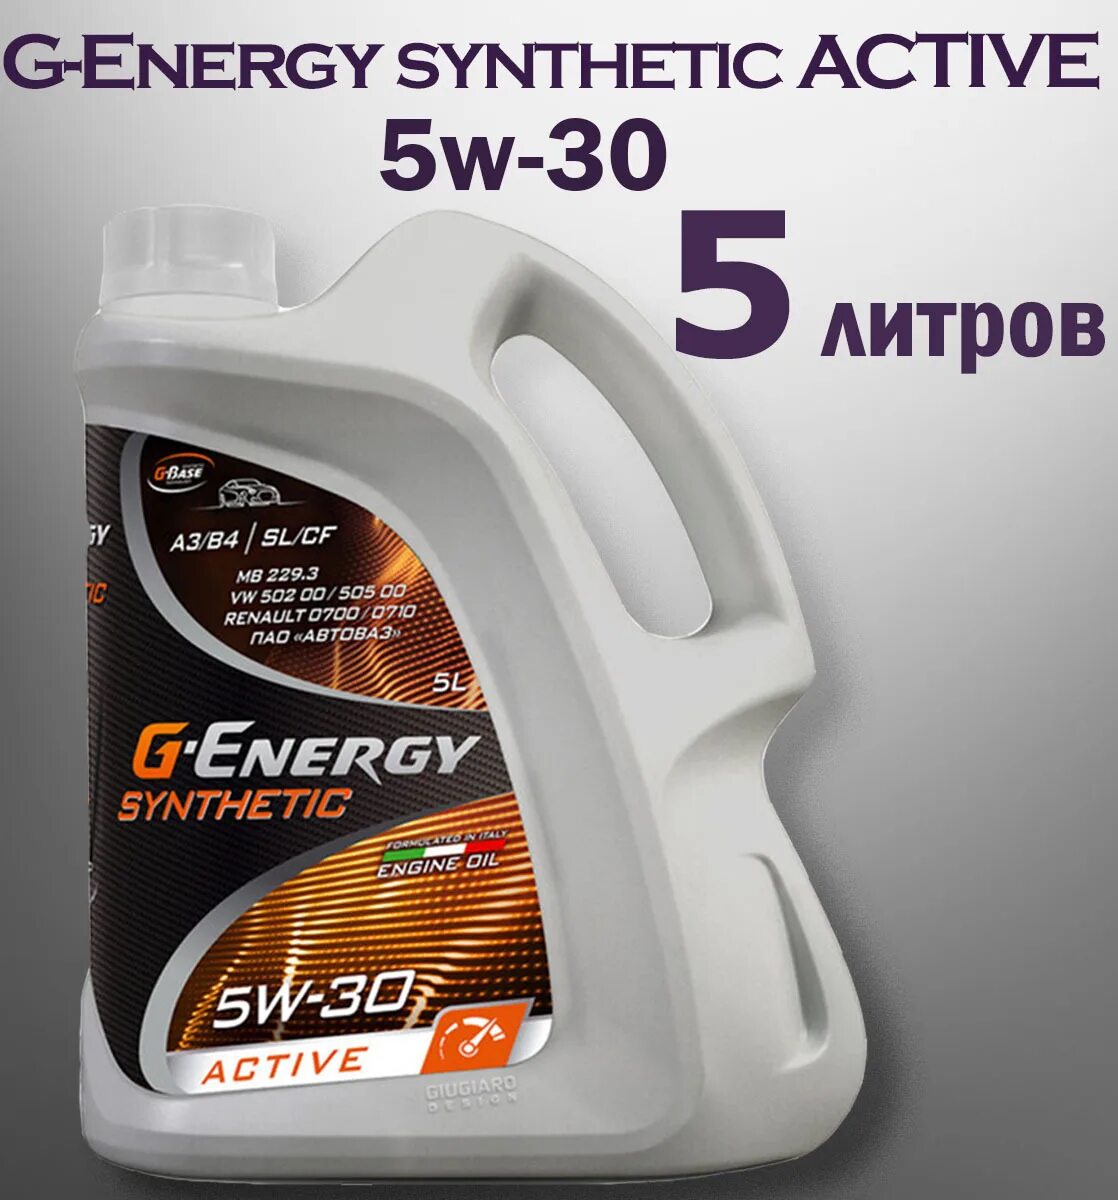 Energy synthetic active 5w 30. Масло g-Energy Syntetic Activ 5w30. G-Energy Synthetic Active 5w-30. G Energy 5w30 синтетика. G Энерджи 5w30 синтетика.